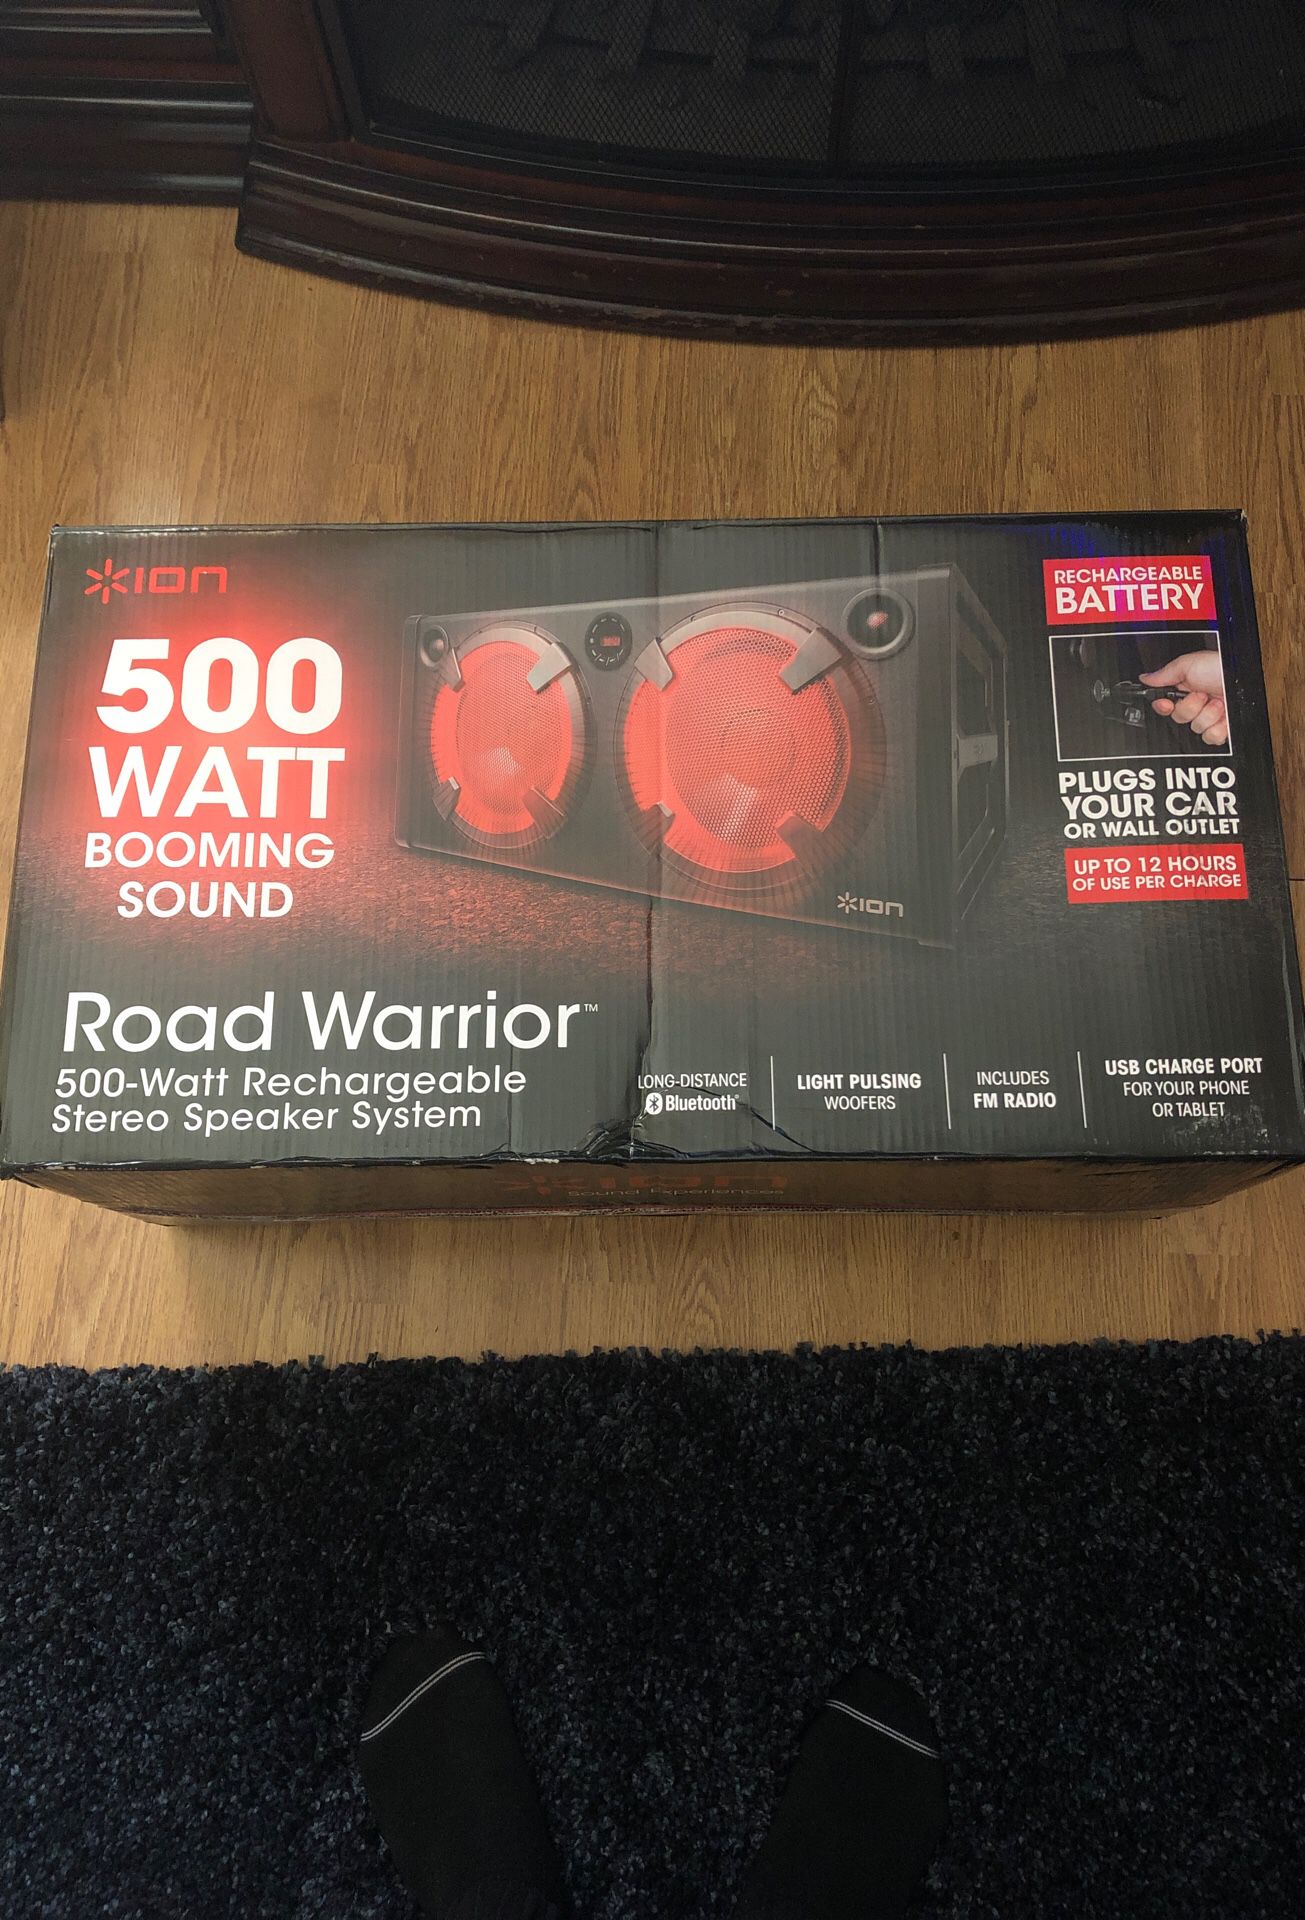 ION Road warrior 500-watt rechargeable stereo speaker system